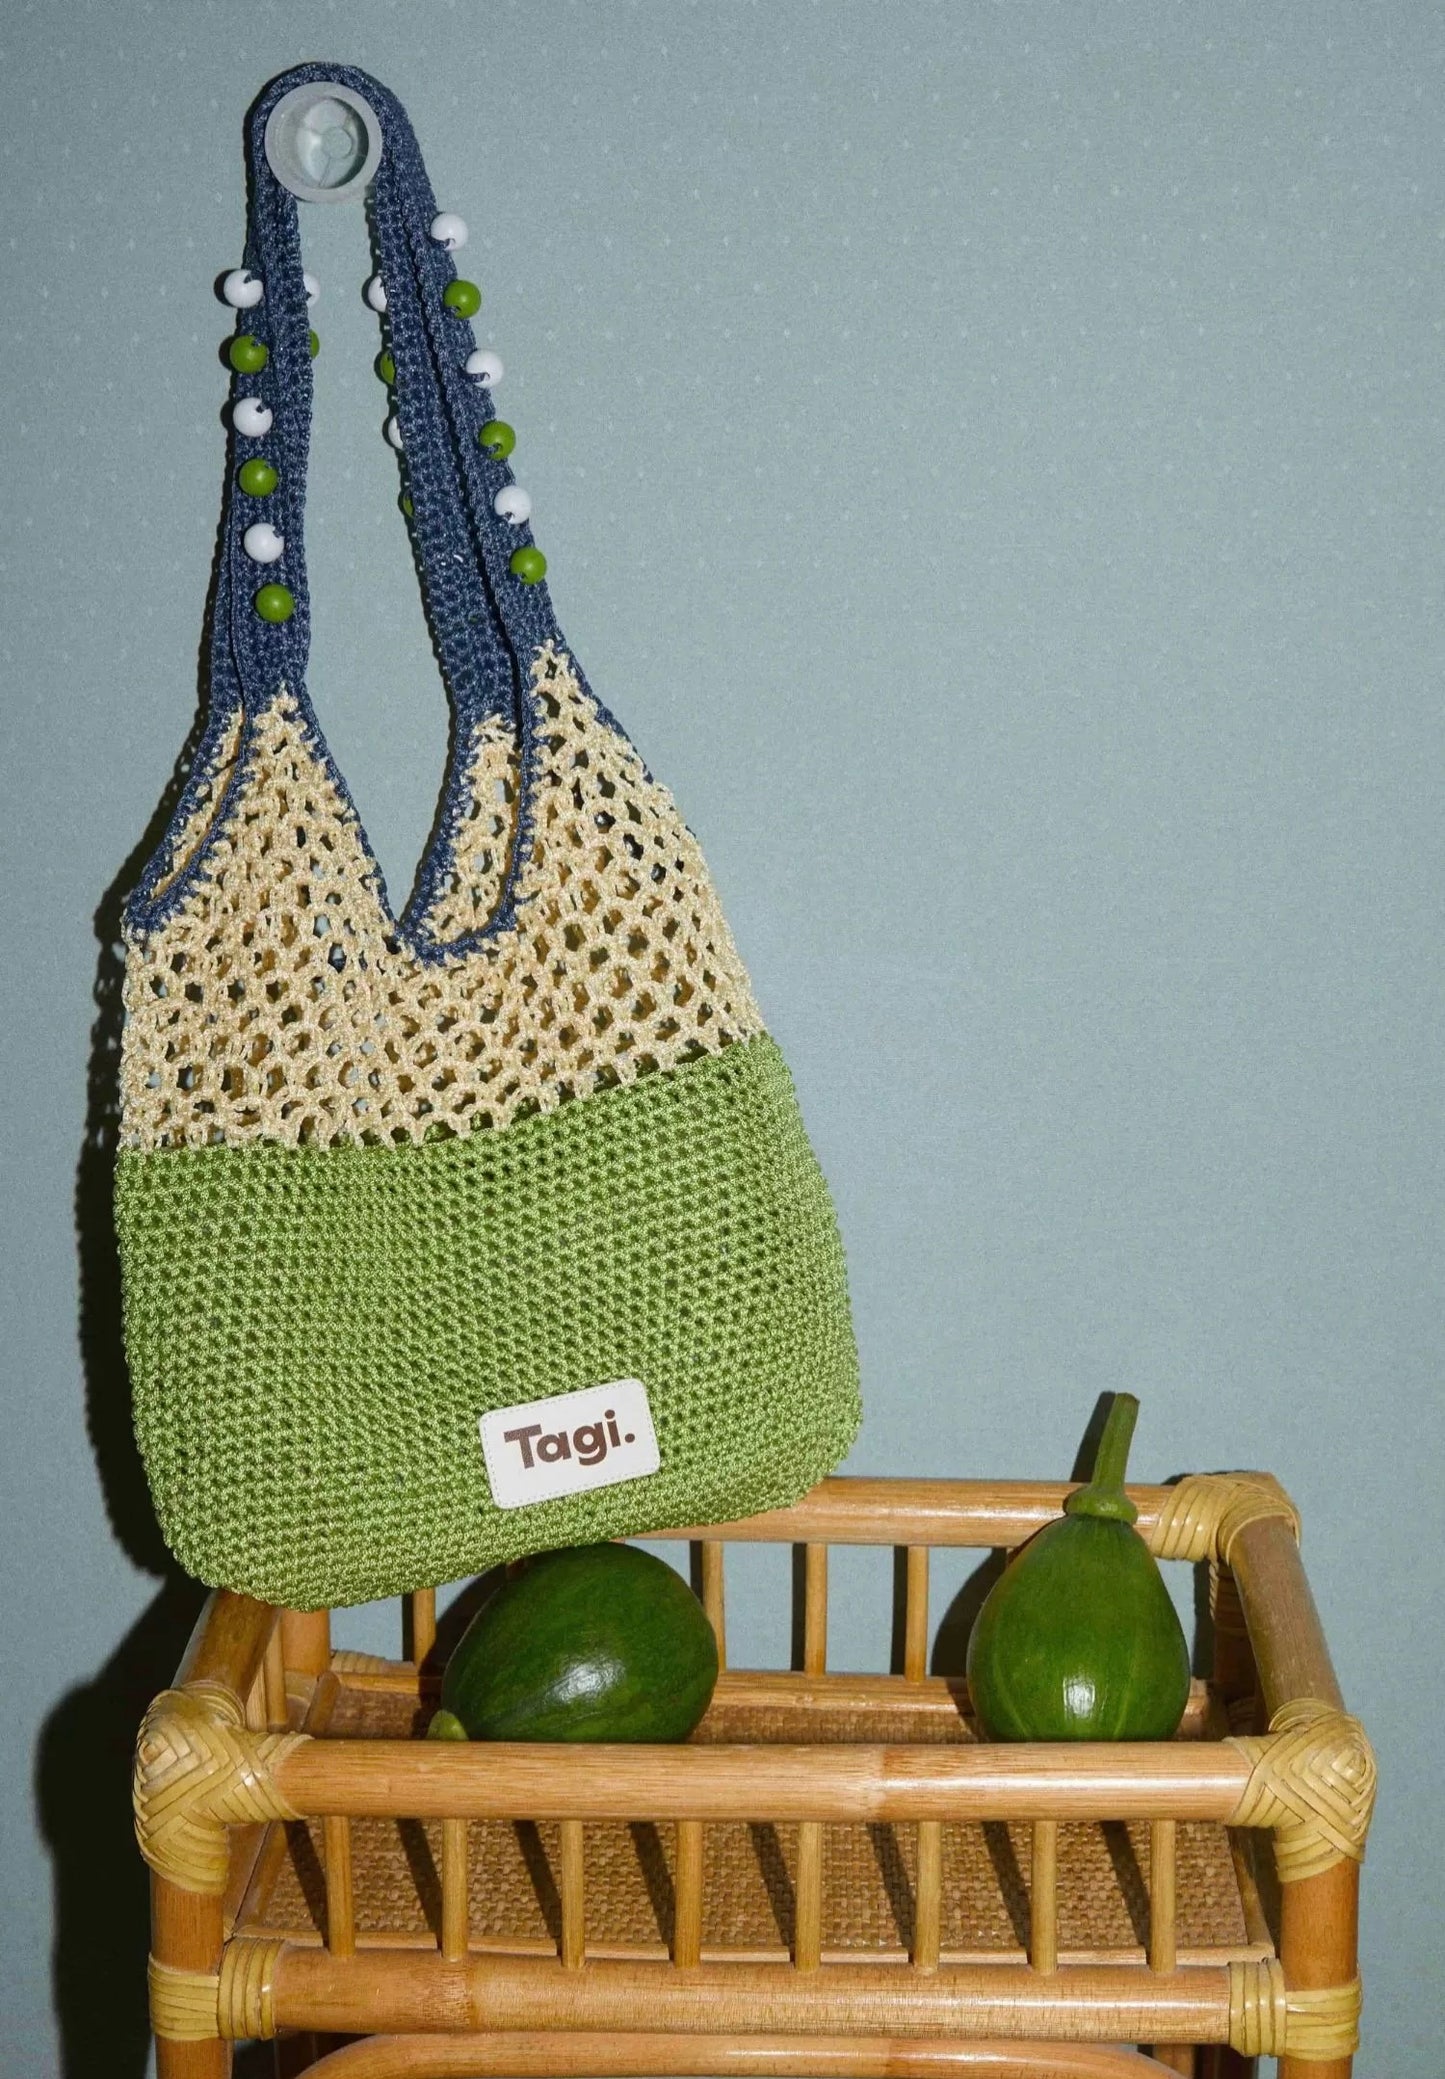 Tagi Signal Fruit Woven Bag Cherry Matcha Cheese